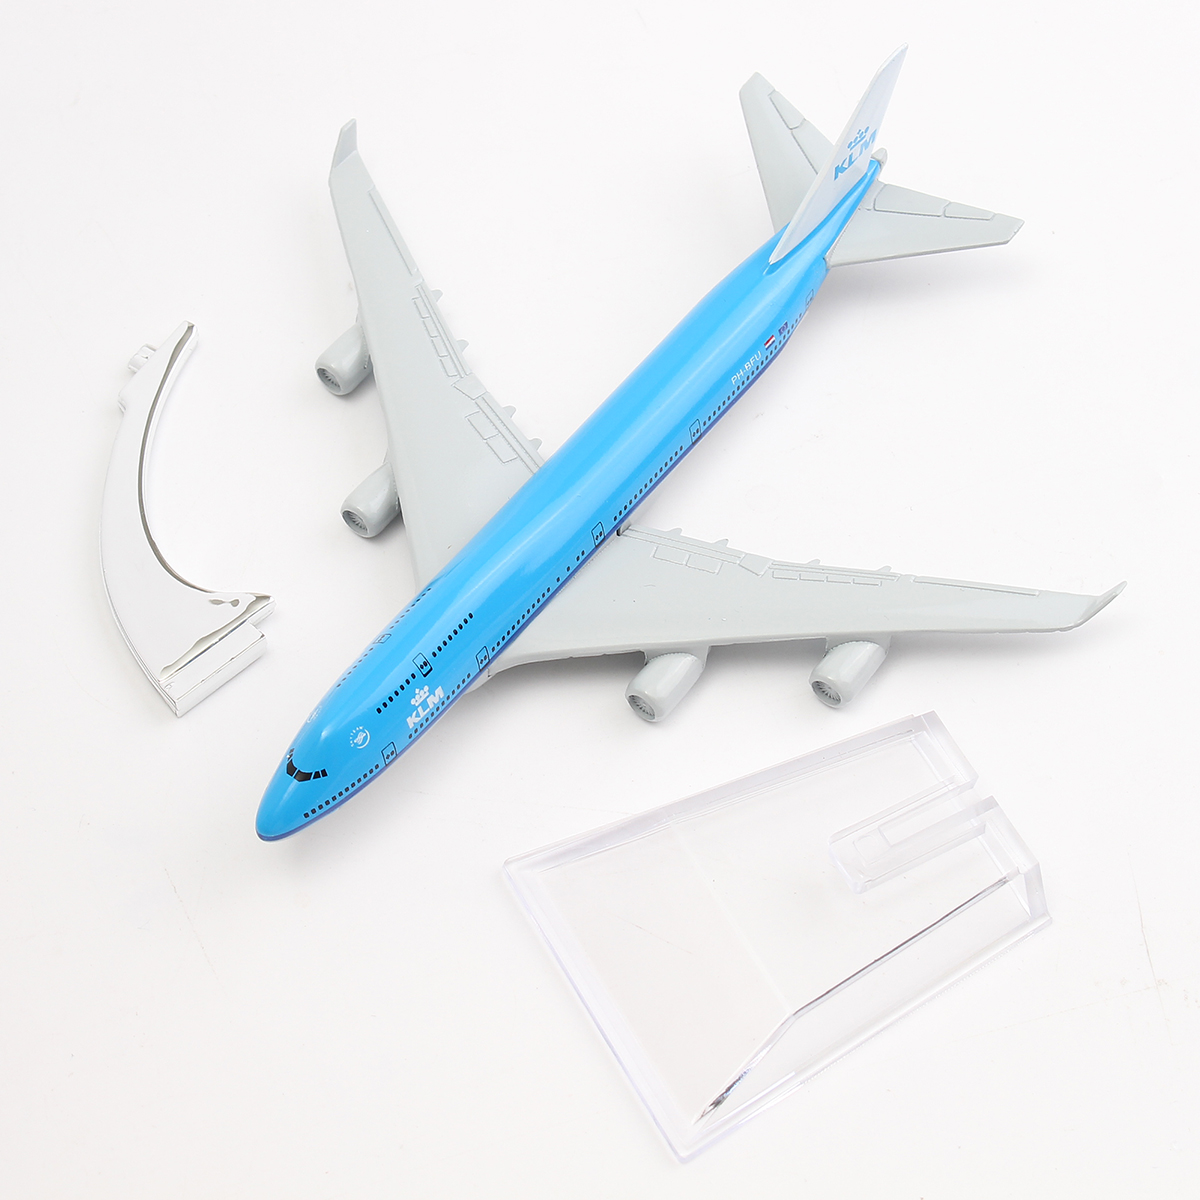 NEW-16cm-Airplane-Metal-Plane-Model-Aircraft-B747-KLM-Aeroplane-Scale-Airplane-Desk-Toy-1102722-9